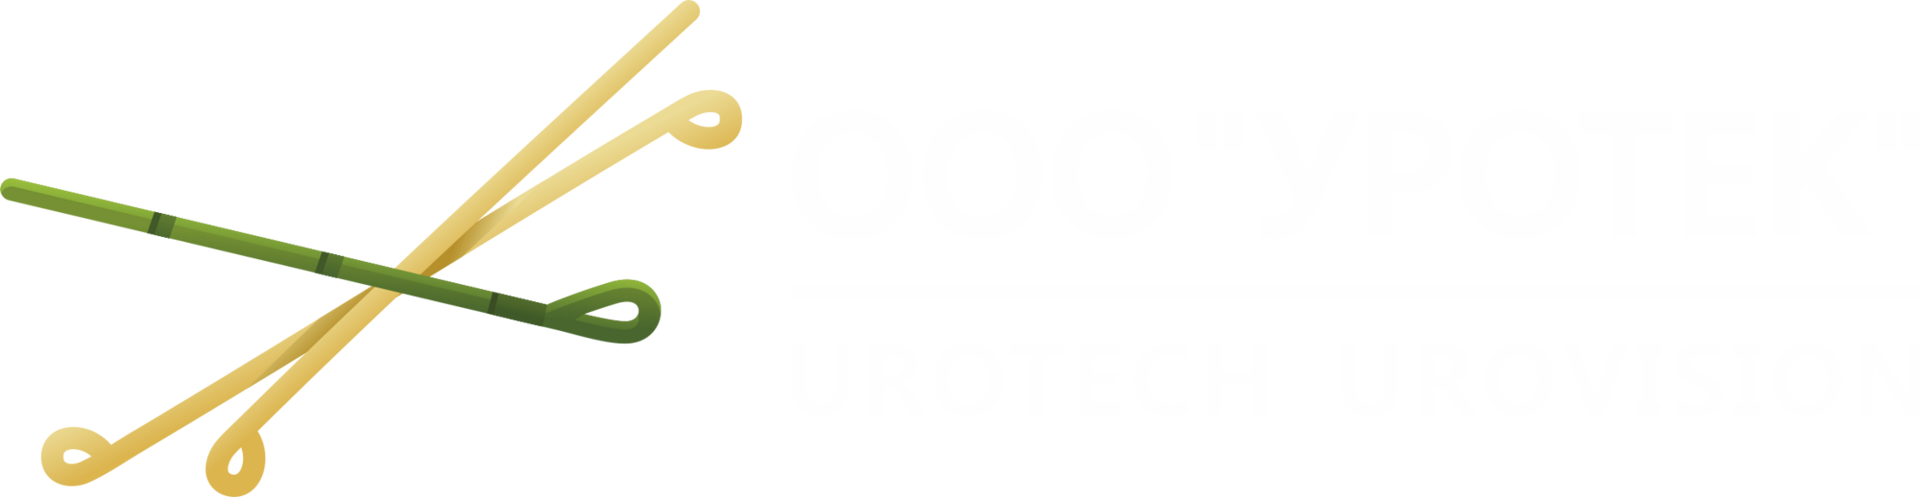 ut_logo_darkbg